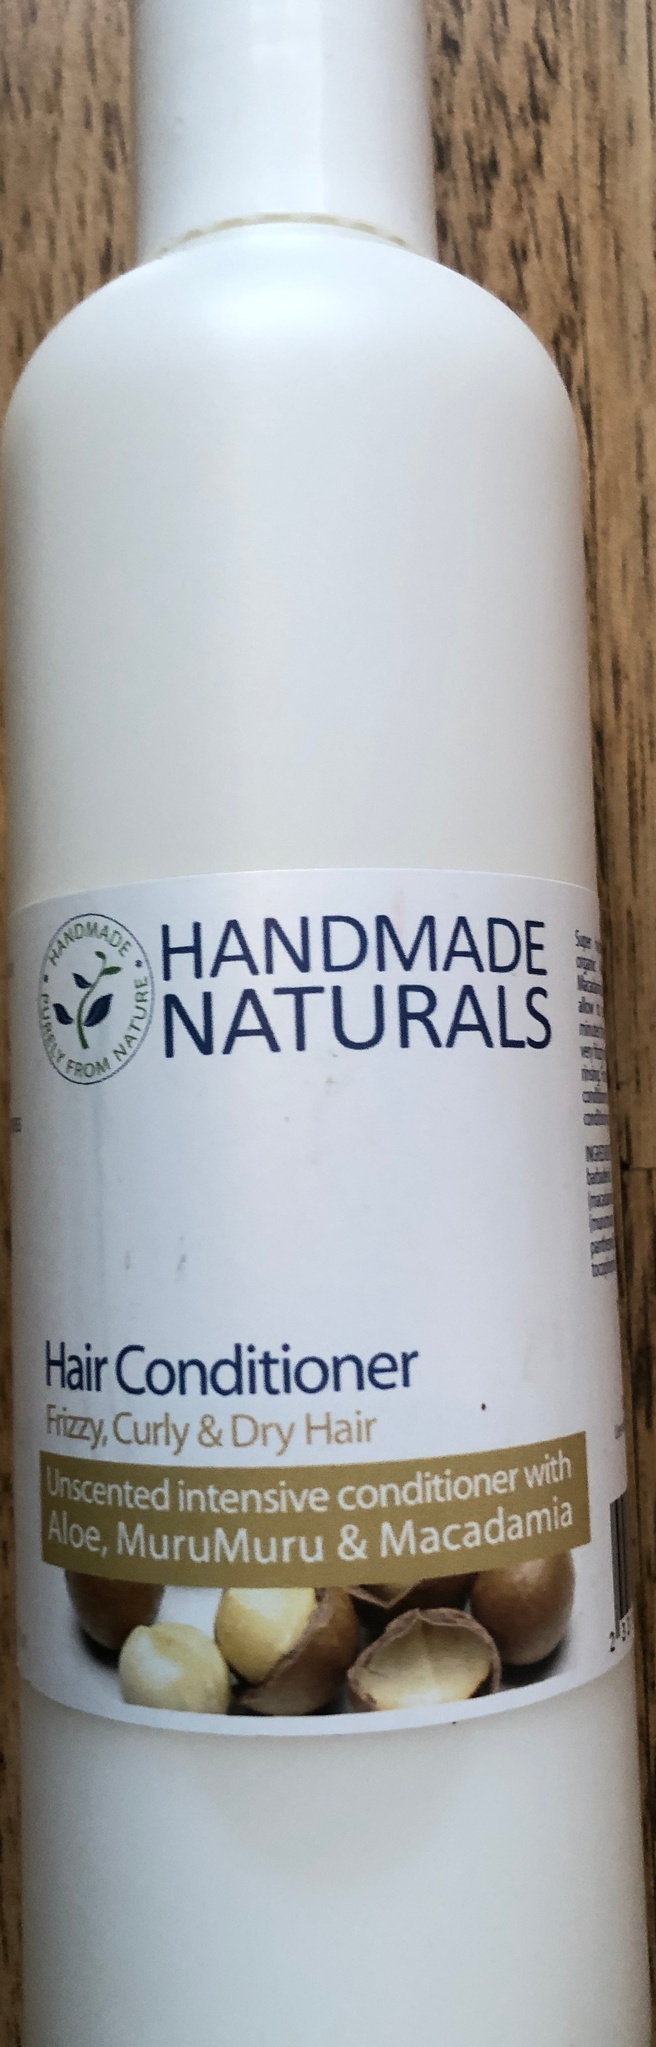 Handmade Naturals Hair Conditioner